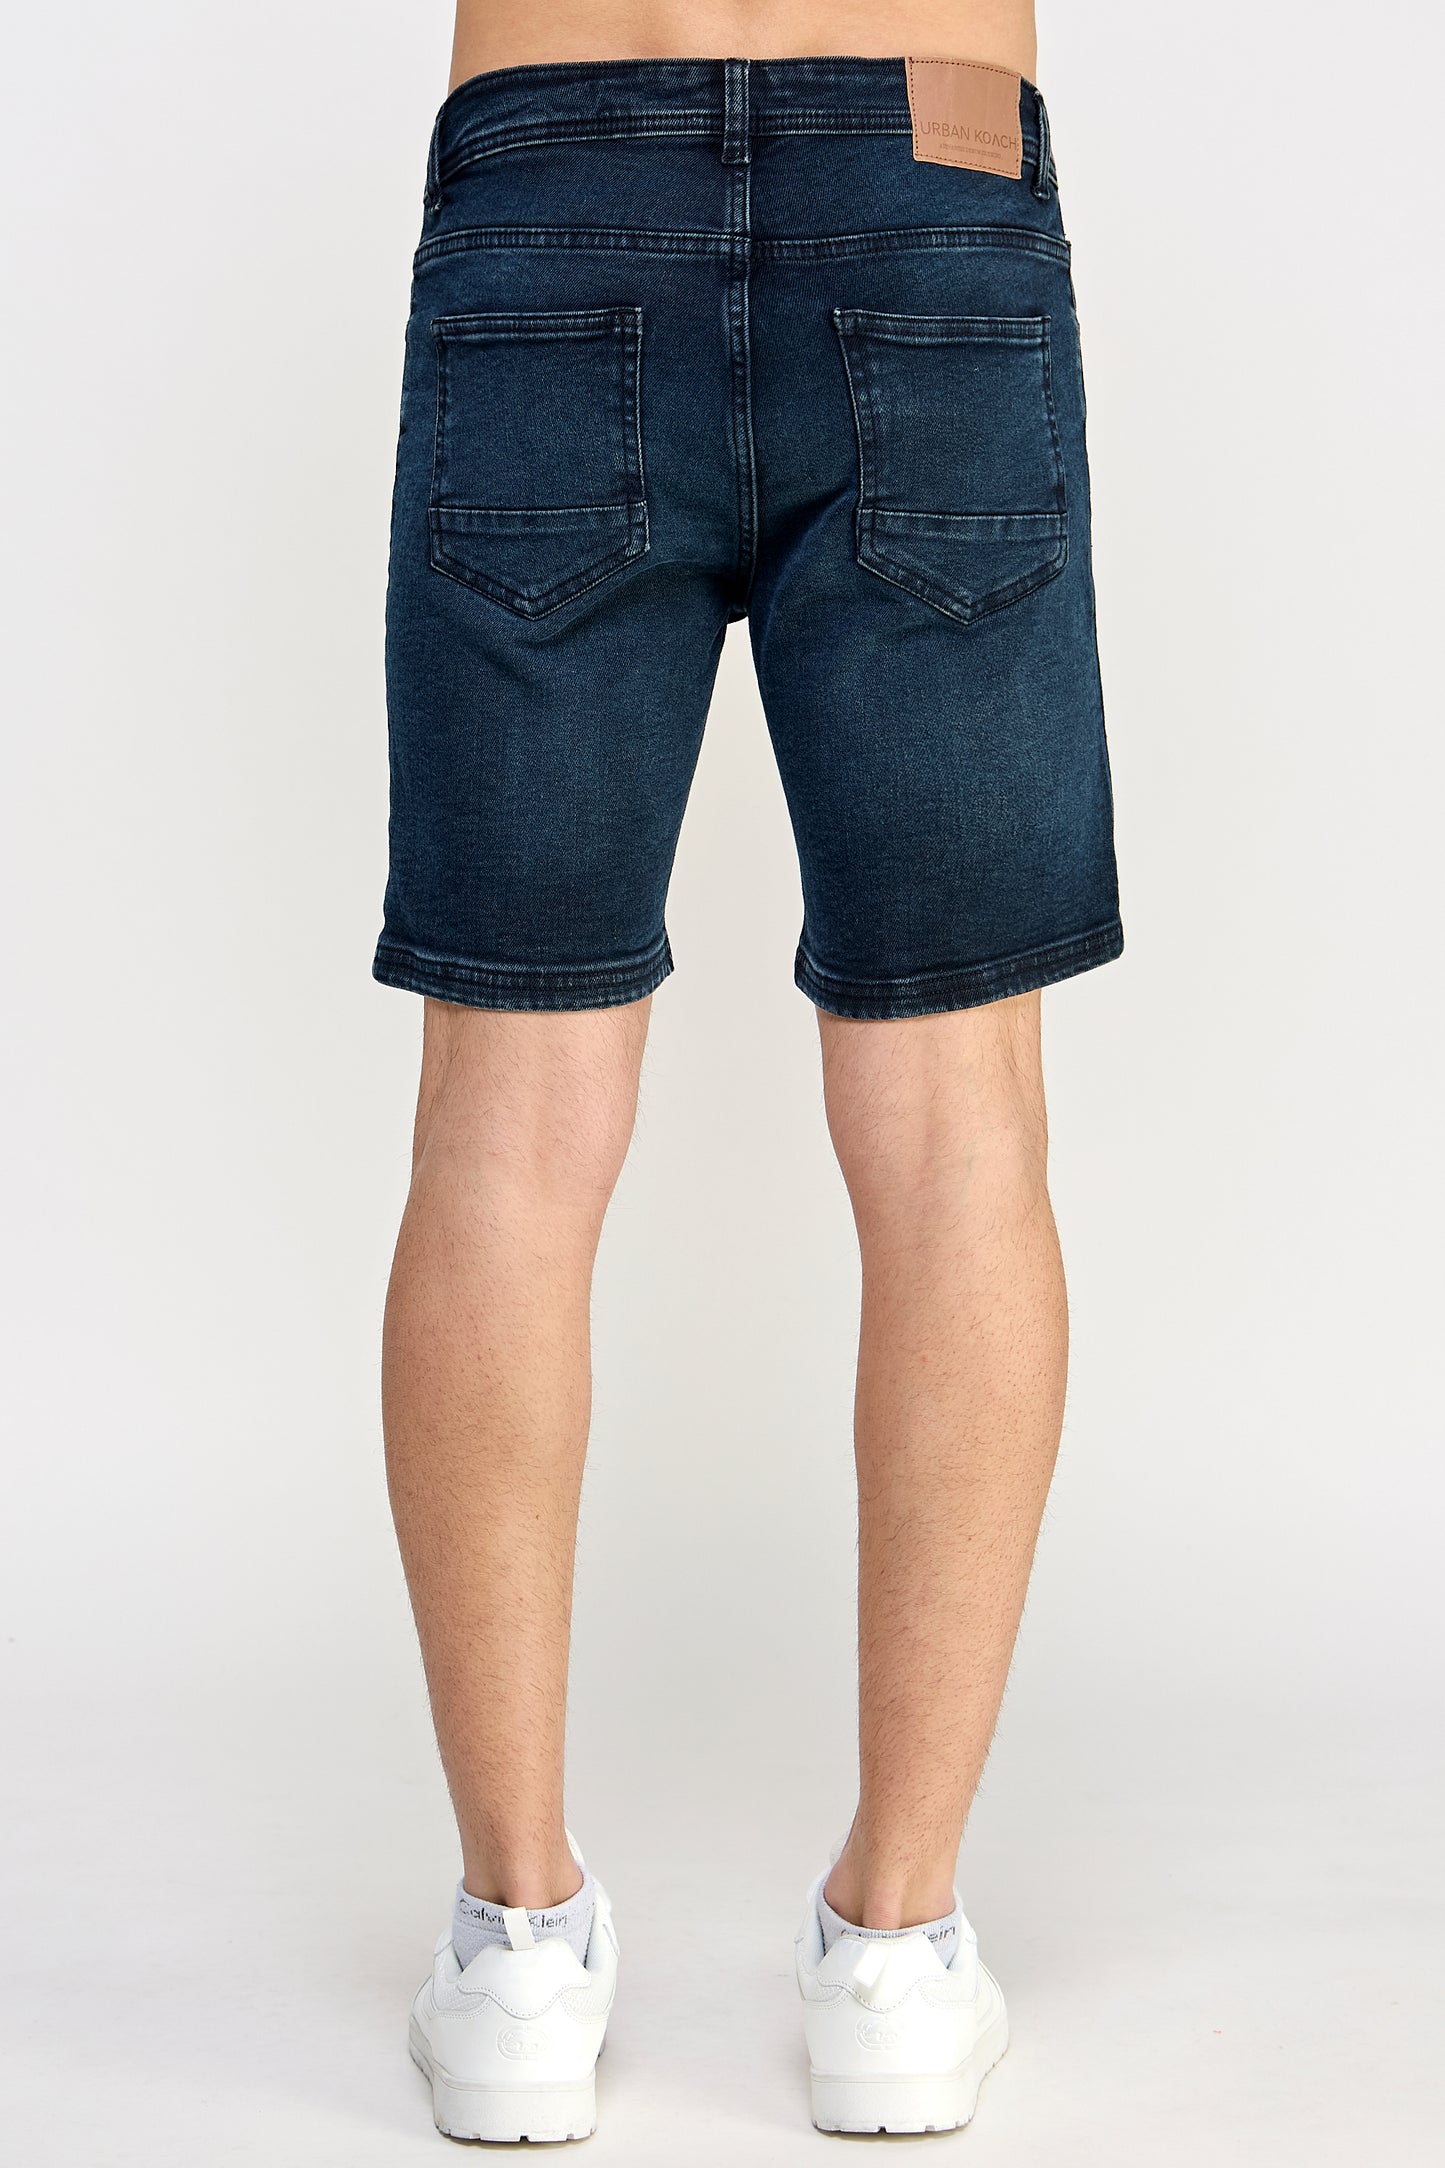 Indigo Denim Shorts